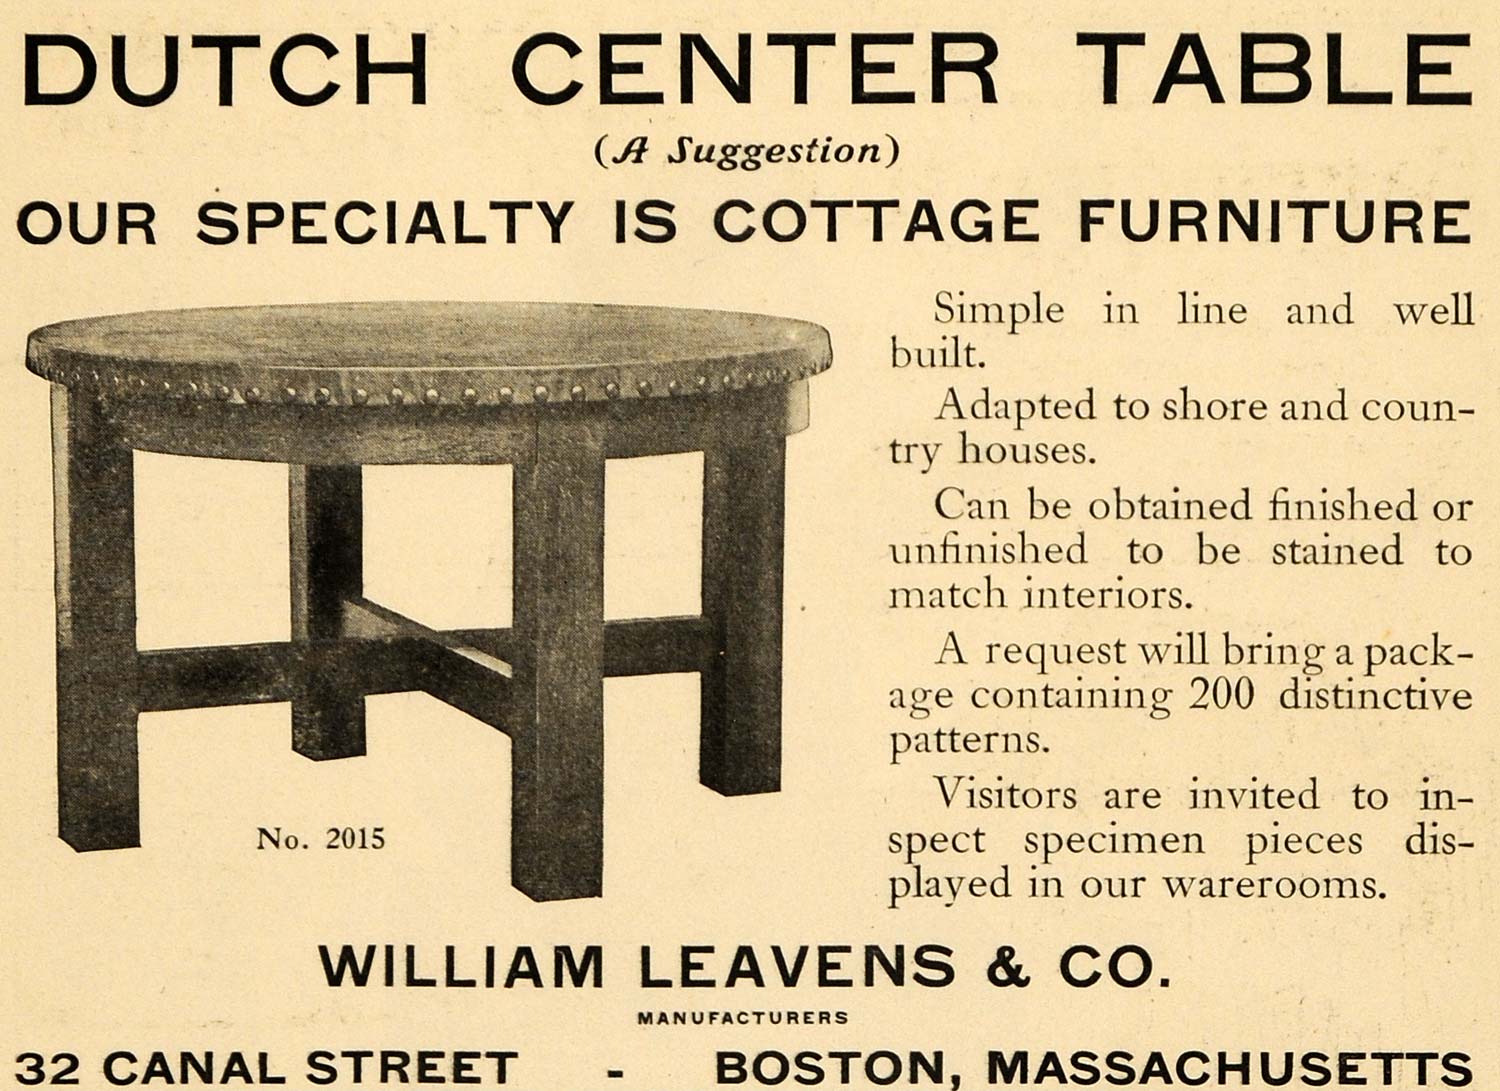 1908 Ad William Leavens Dutch Table Cottage Furniture - ORIGINAL ADVERTISING GH2